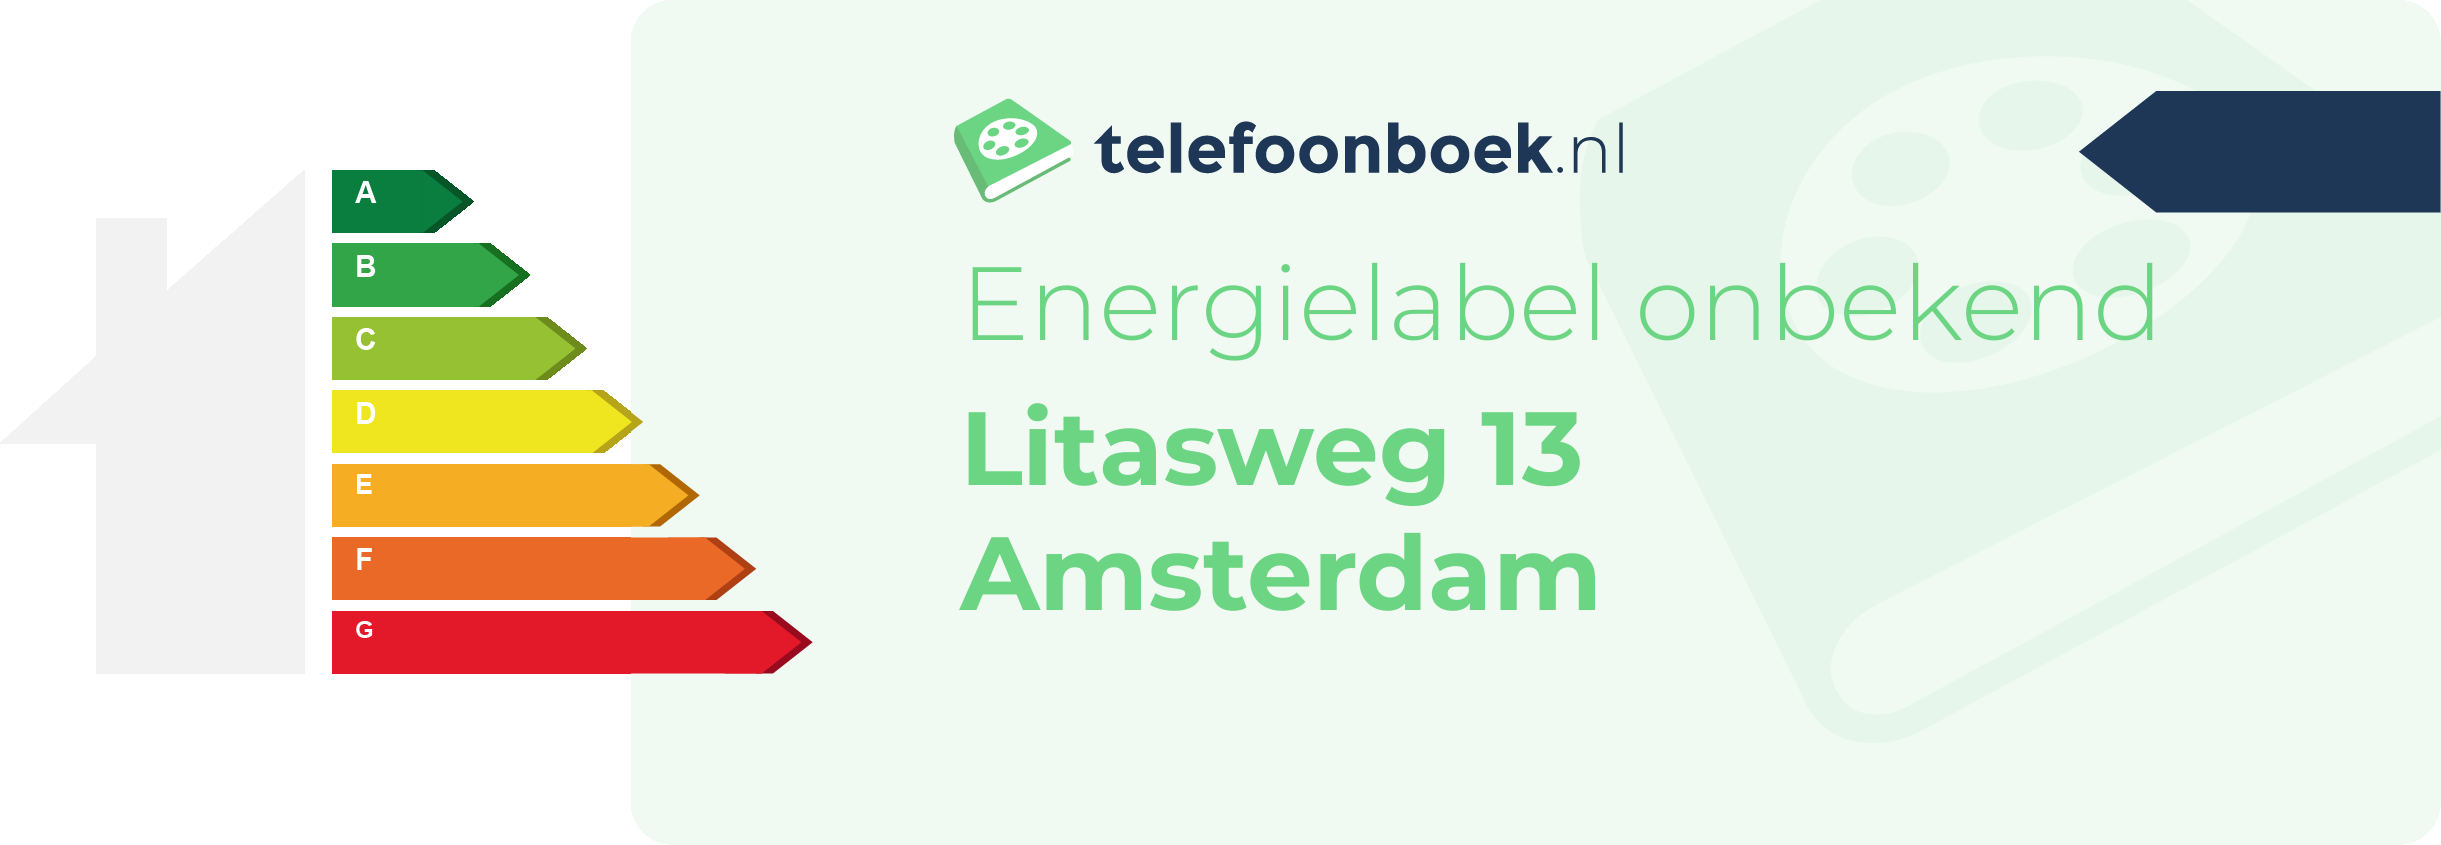 Energielabel Litasweg 13 Amsterdam